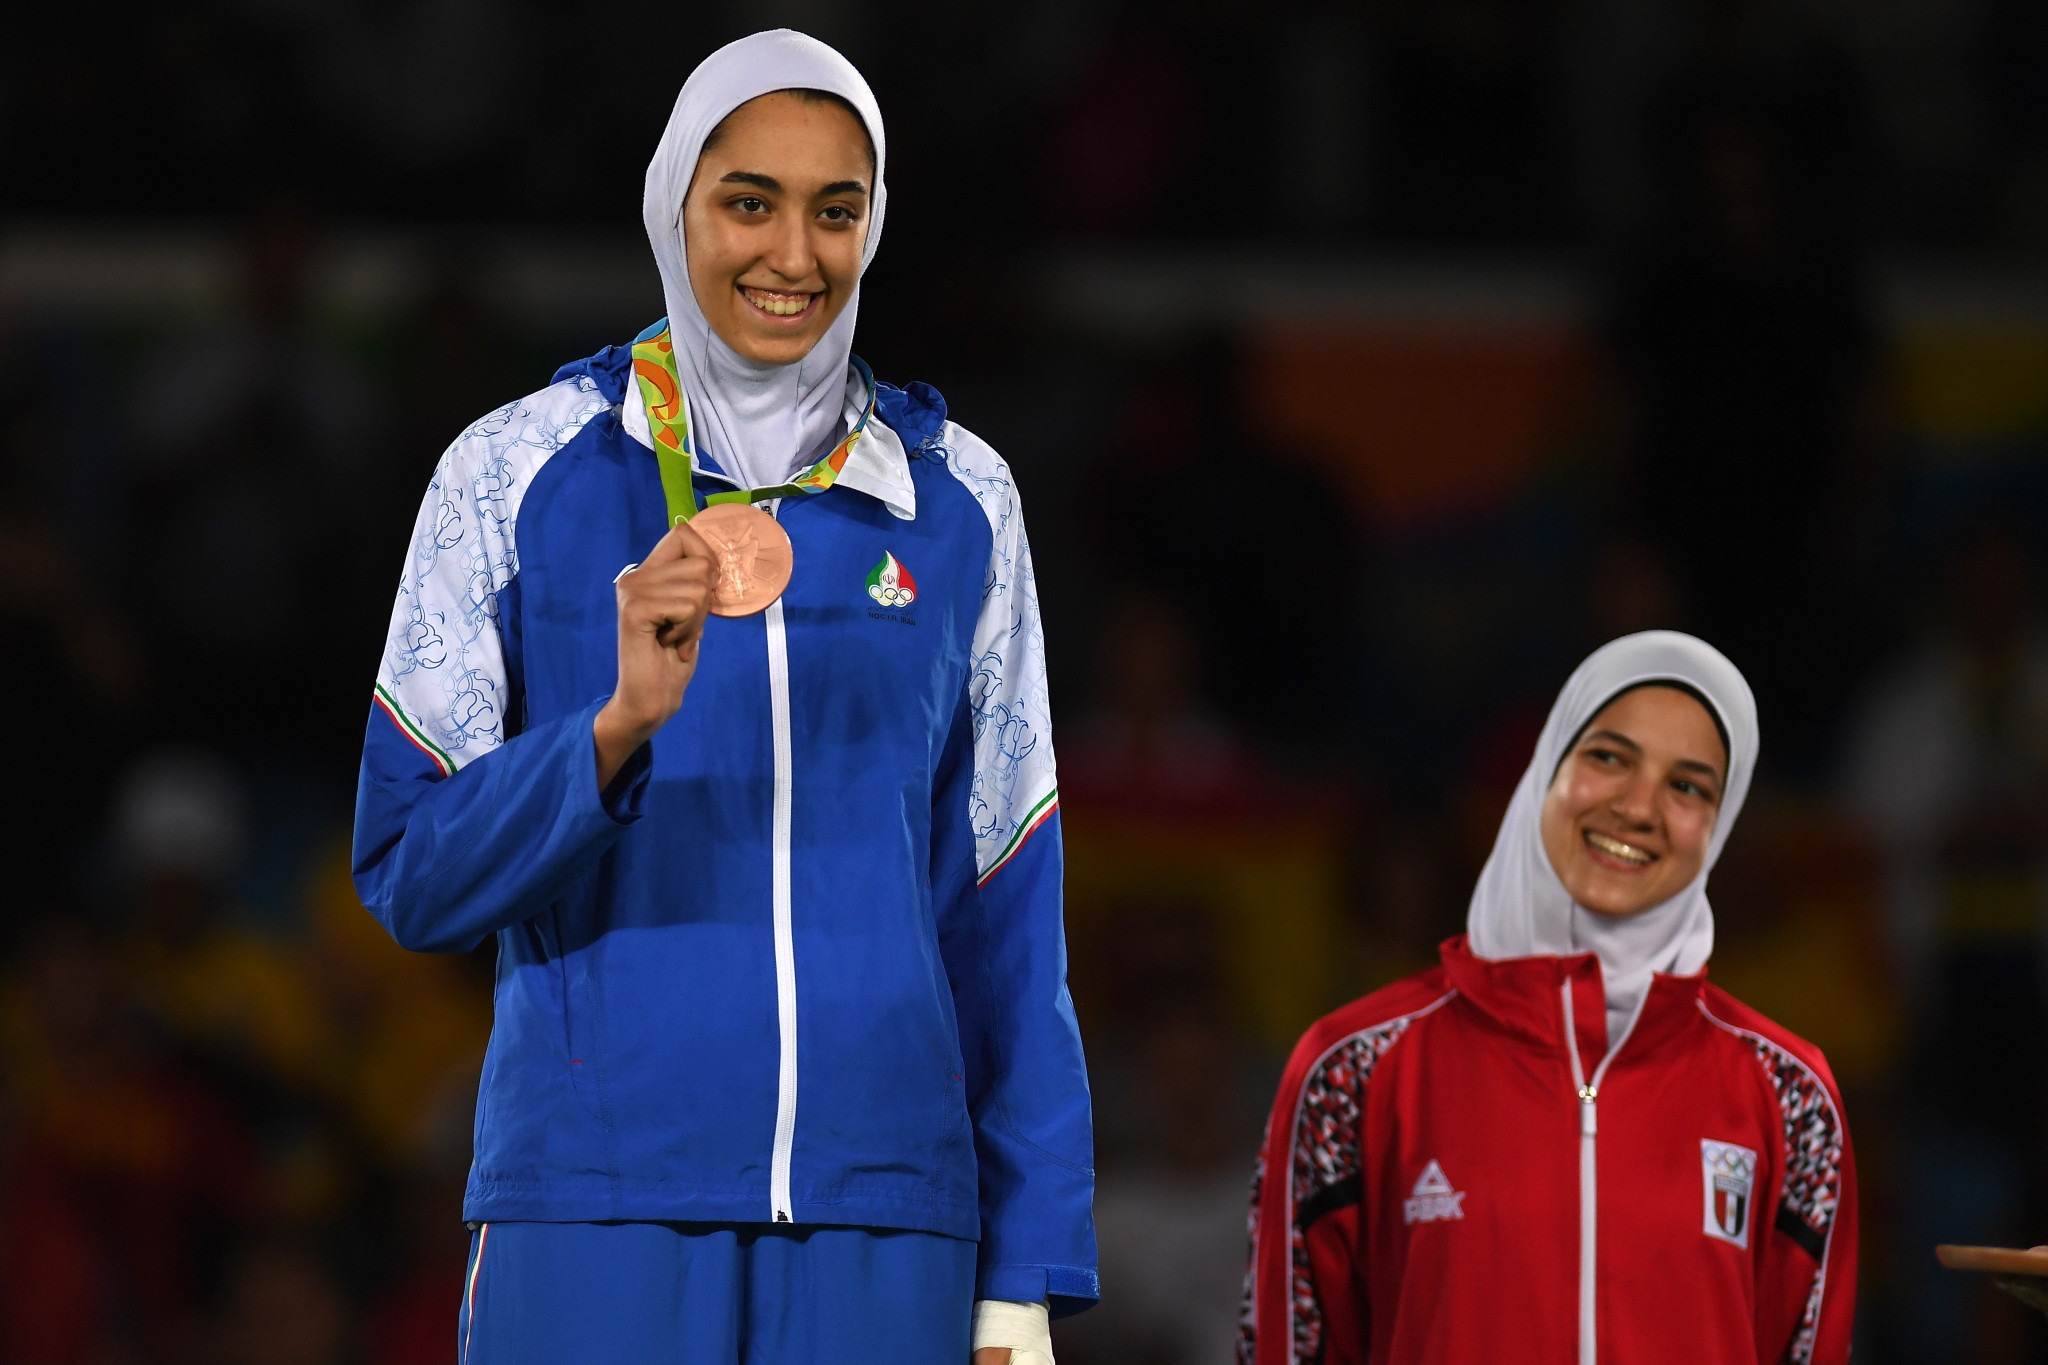 Kimia Alizadeh Zenoorin won Olympic taekwondo bronze in 2016 before seeking refuge from Iran ©Getty Images